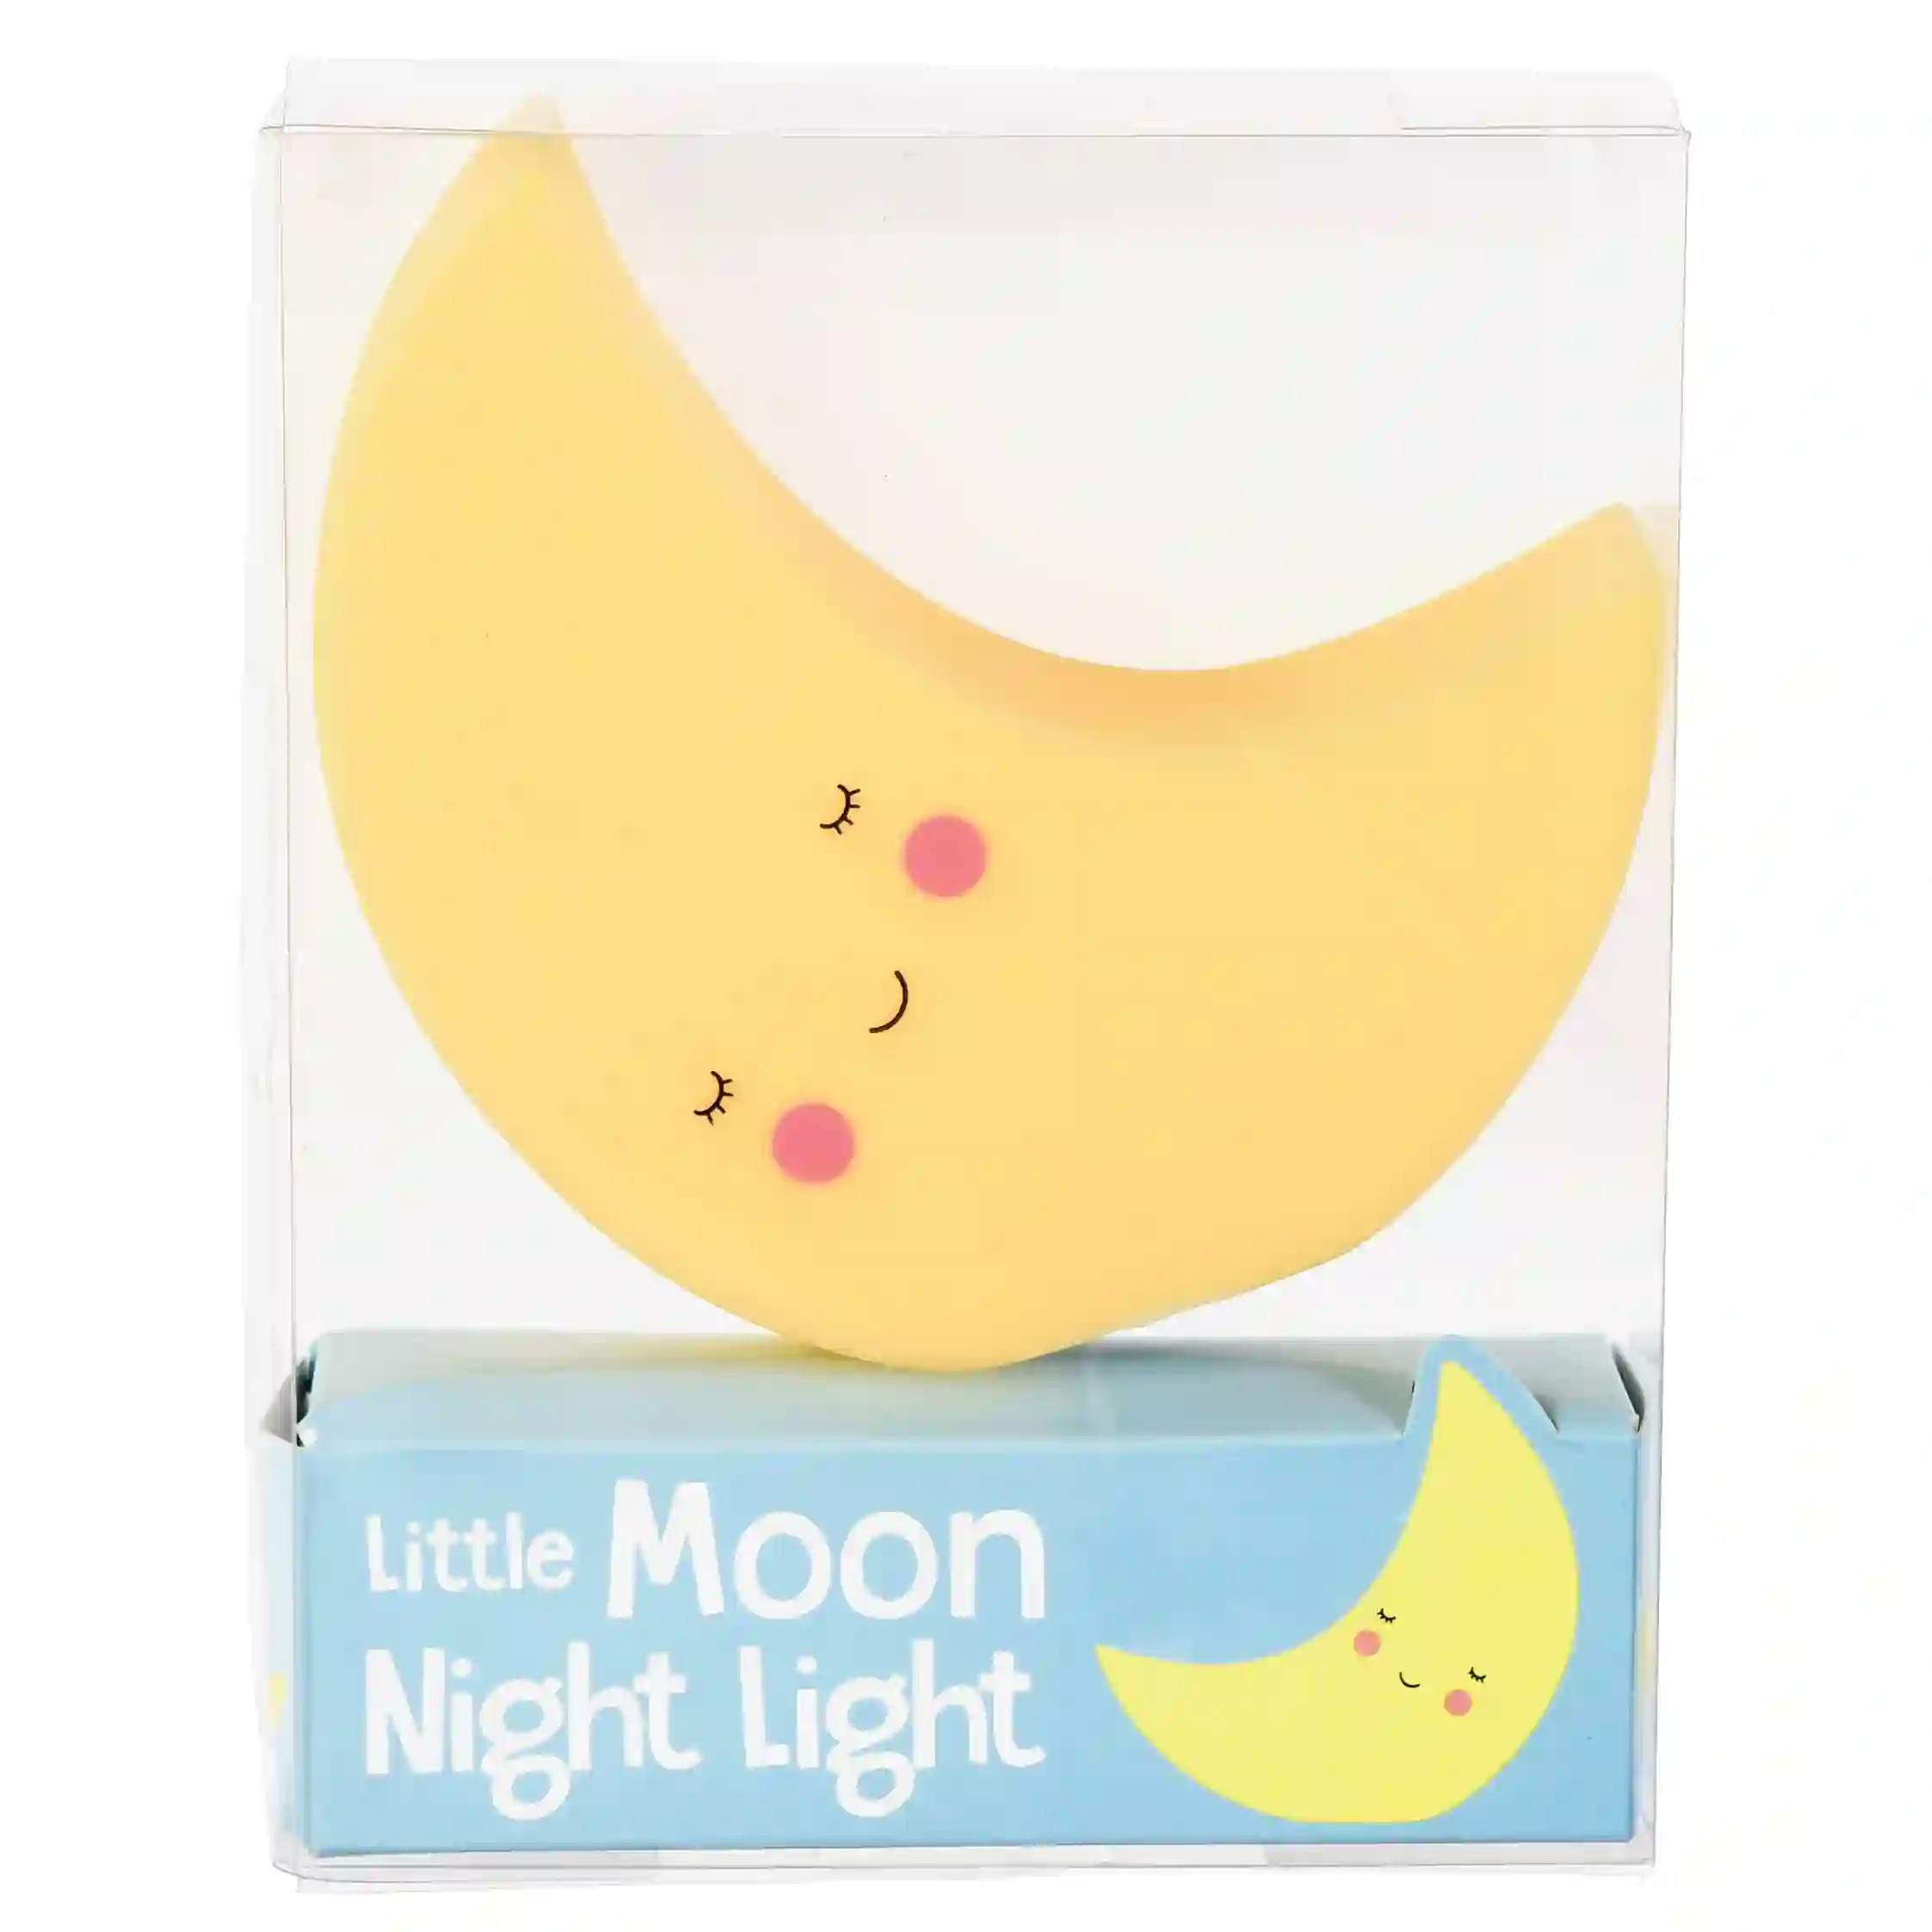 night light - yellow moon